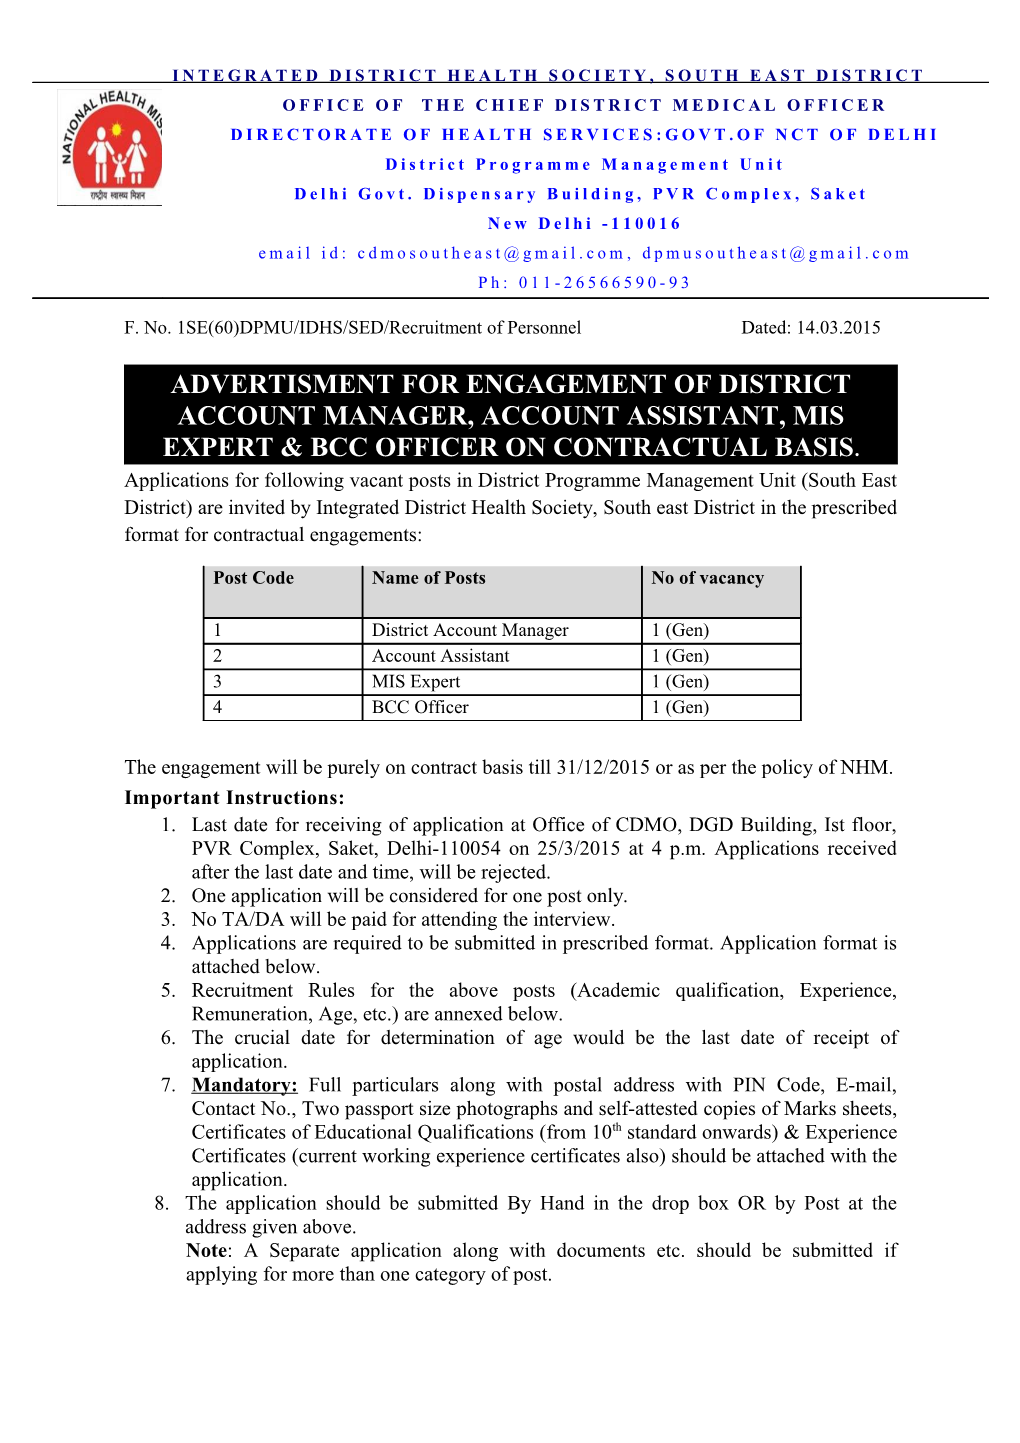 F. No. 1SE(60)DPMU/IDHS/SED/Recruitment of Personneldated: 14.03.2015